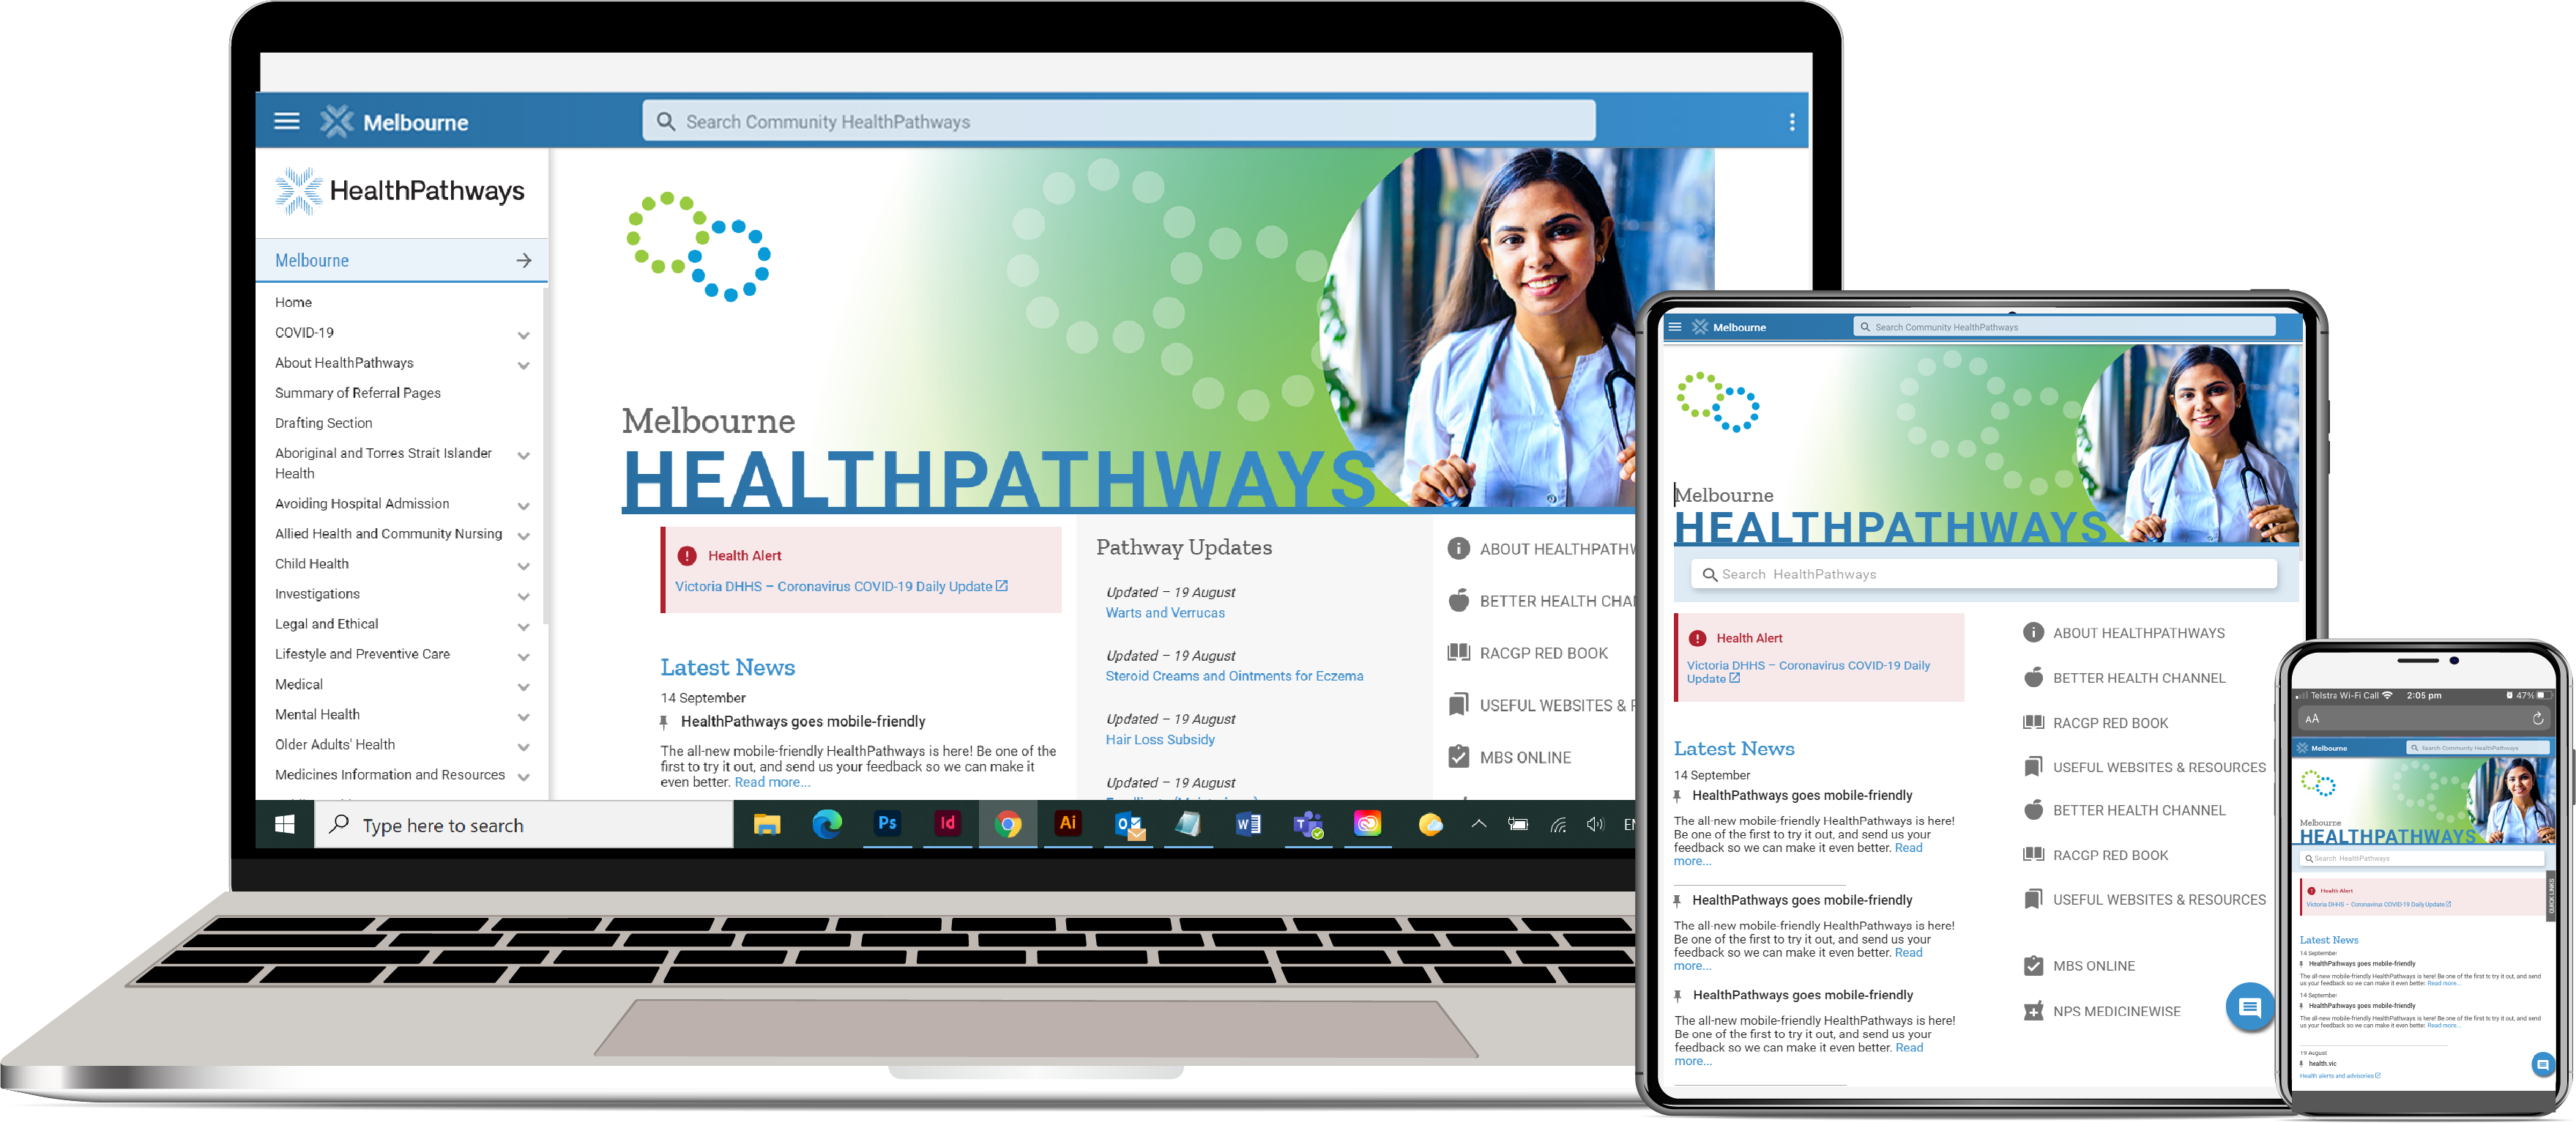 The new mobile friendly HealthPathways platform